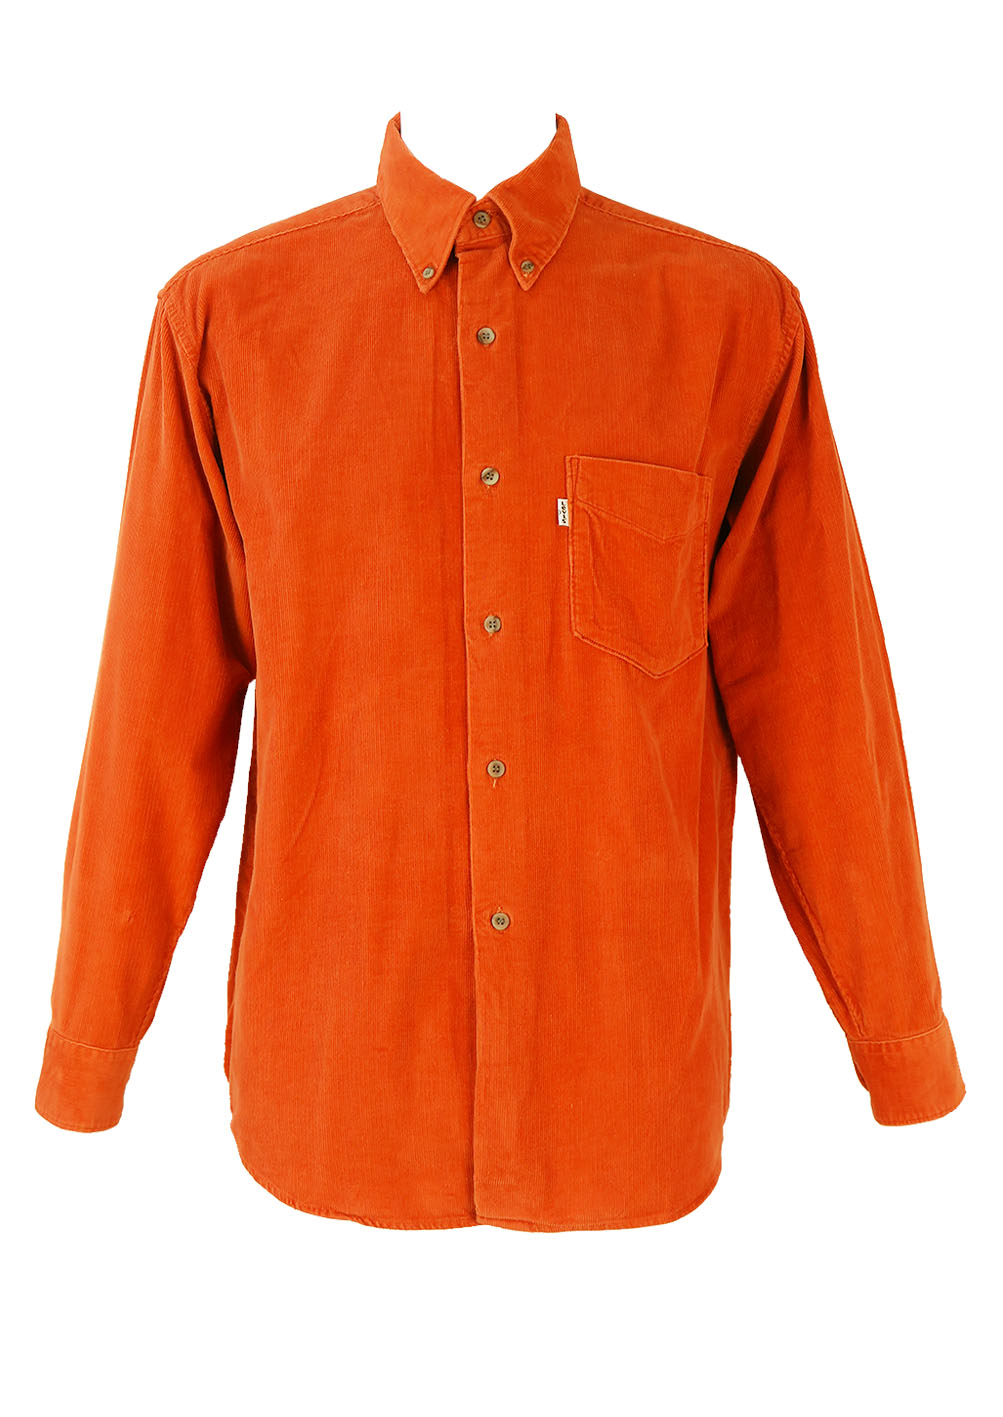 SAMPLE Levi's LVC Orange Tab Denim Shirt w/ Corduroy Flaps sz XS